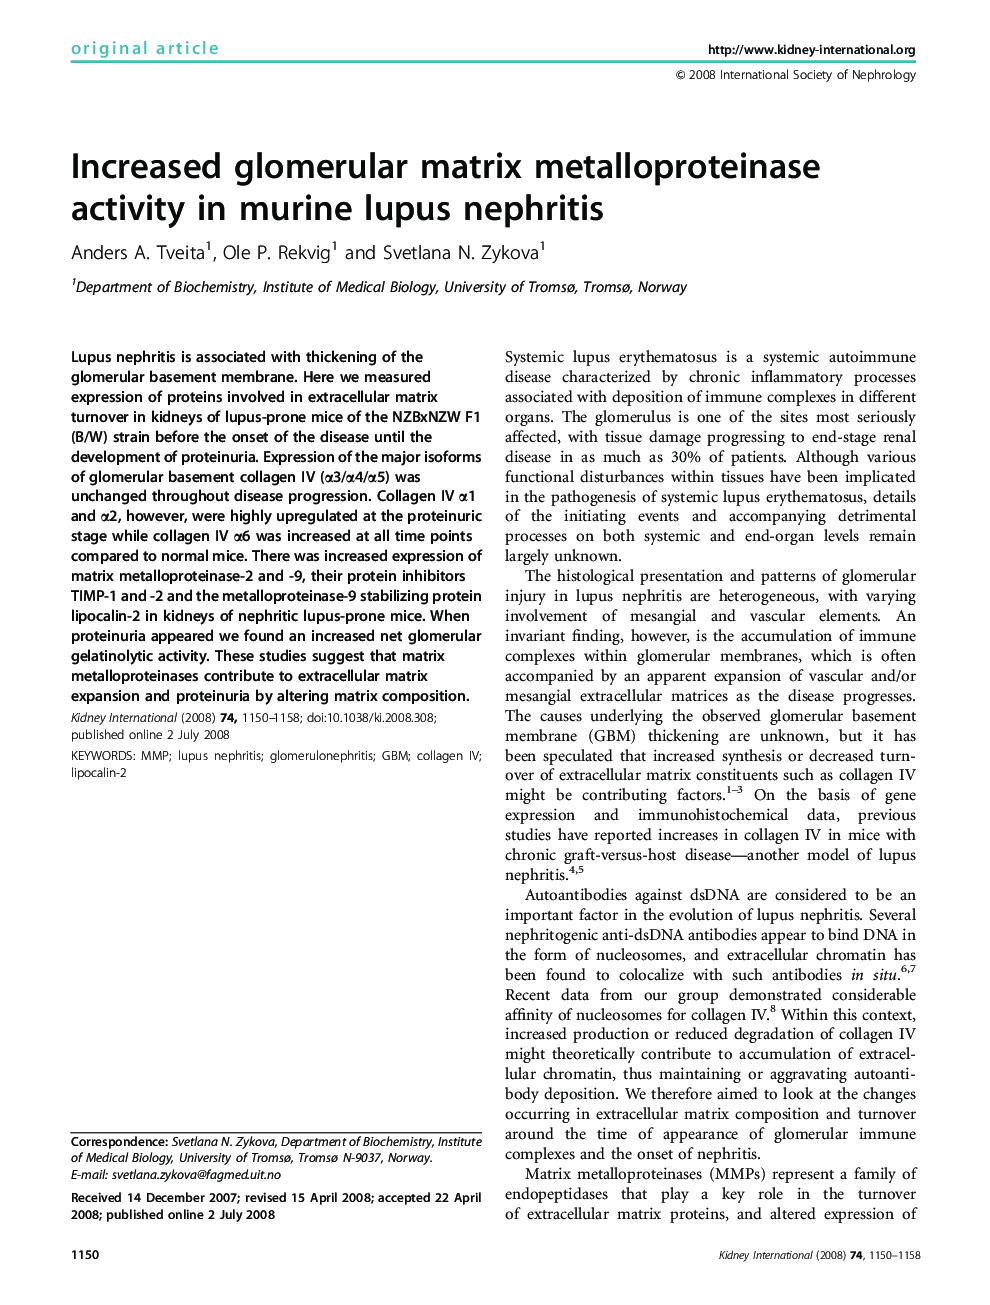 Increased glomerular matrix metalloproteinase activity in murine lupus nephritis